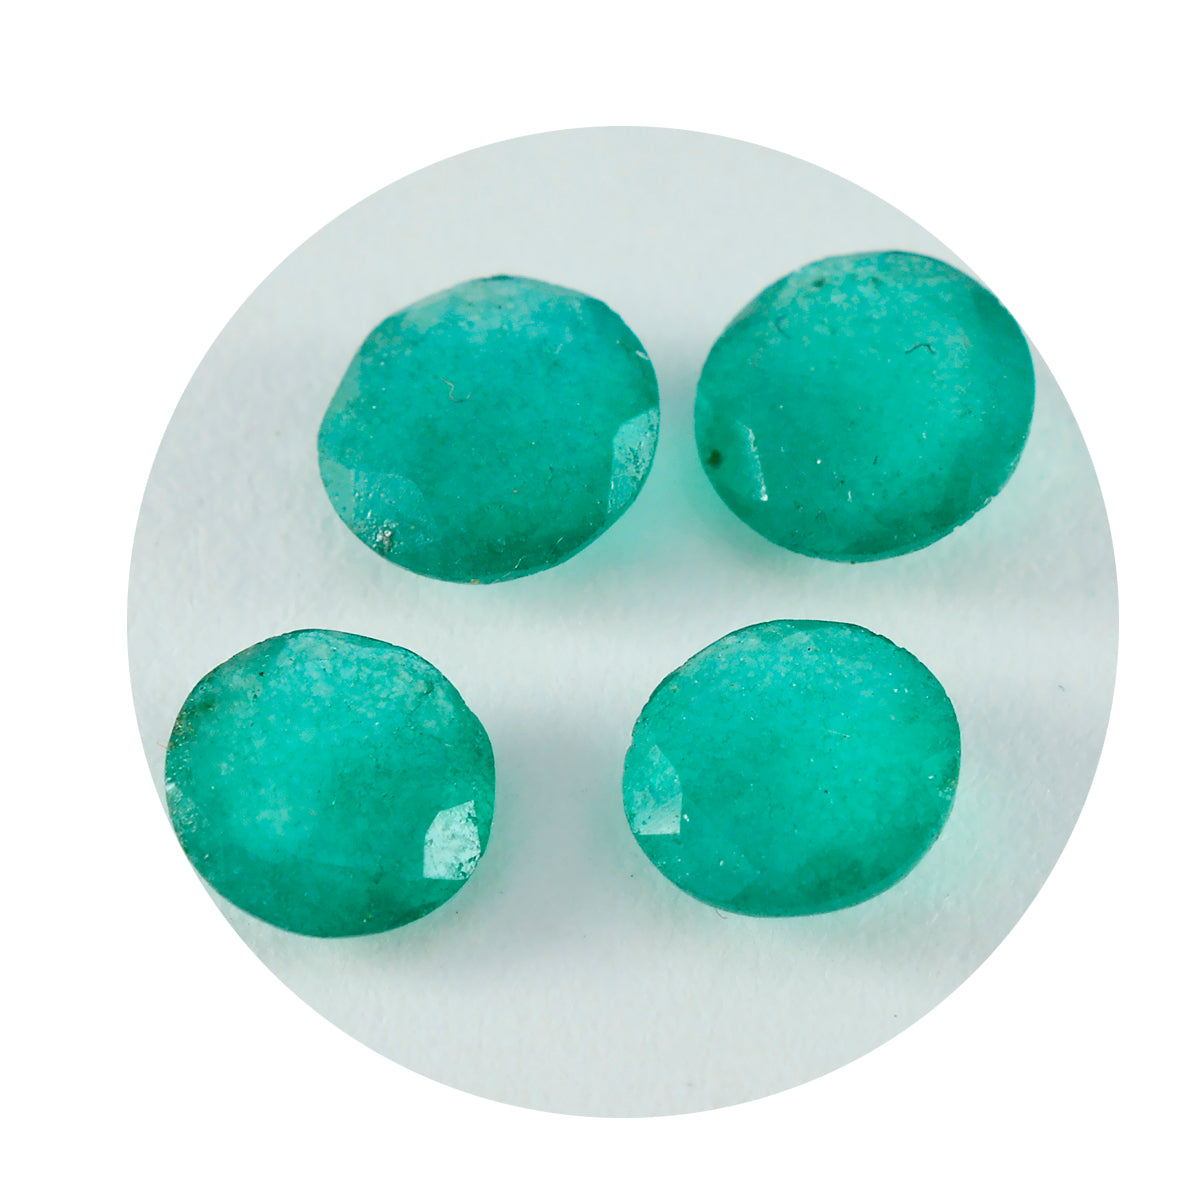 riyogems 1pc ナチュラル グリーン ジャスパー ファセット 10x10 mm ラウンド形状の優れた品質の宝石